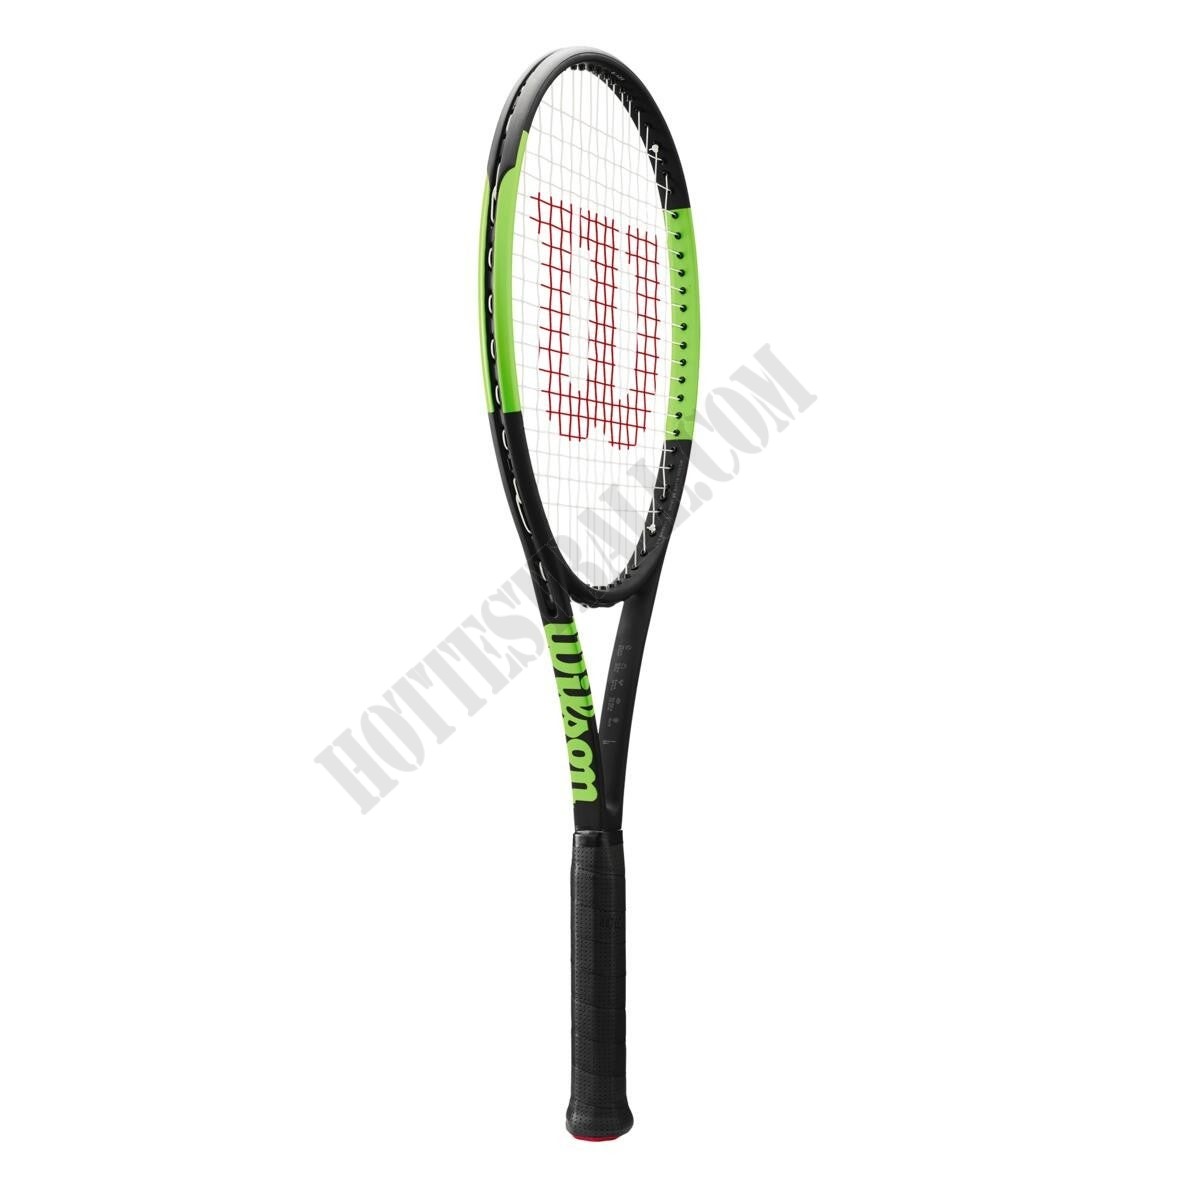 Blade 98 (16x19) v6 Tennis Racket - Wilson Discount Store - Blade 98 (16x19) v6 Tennis Racket - Wilson Discount Store